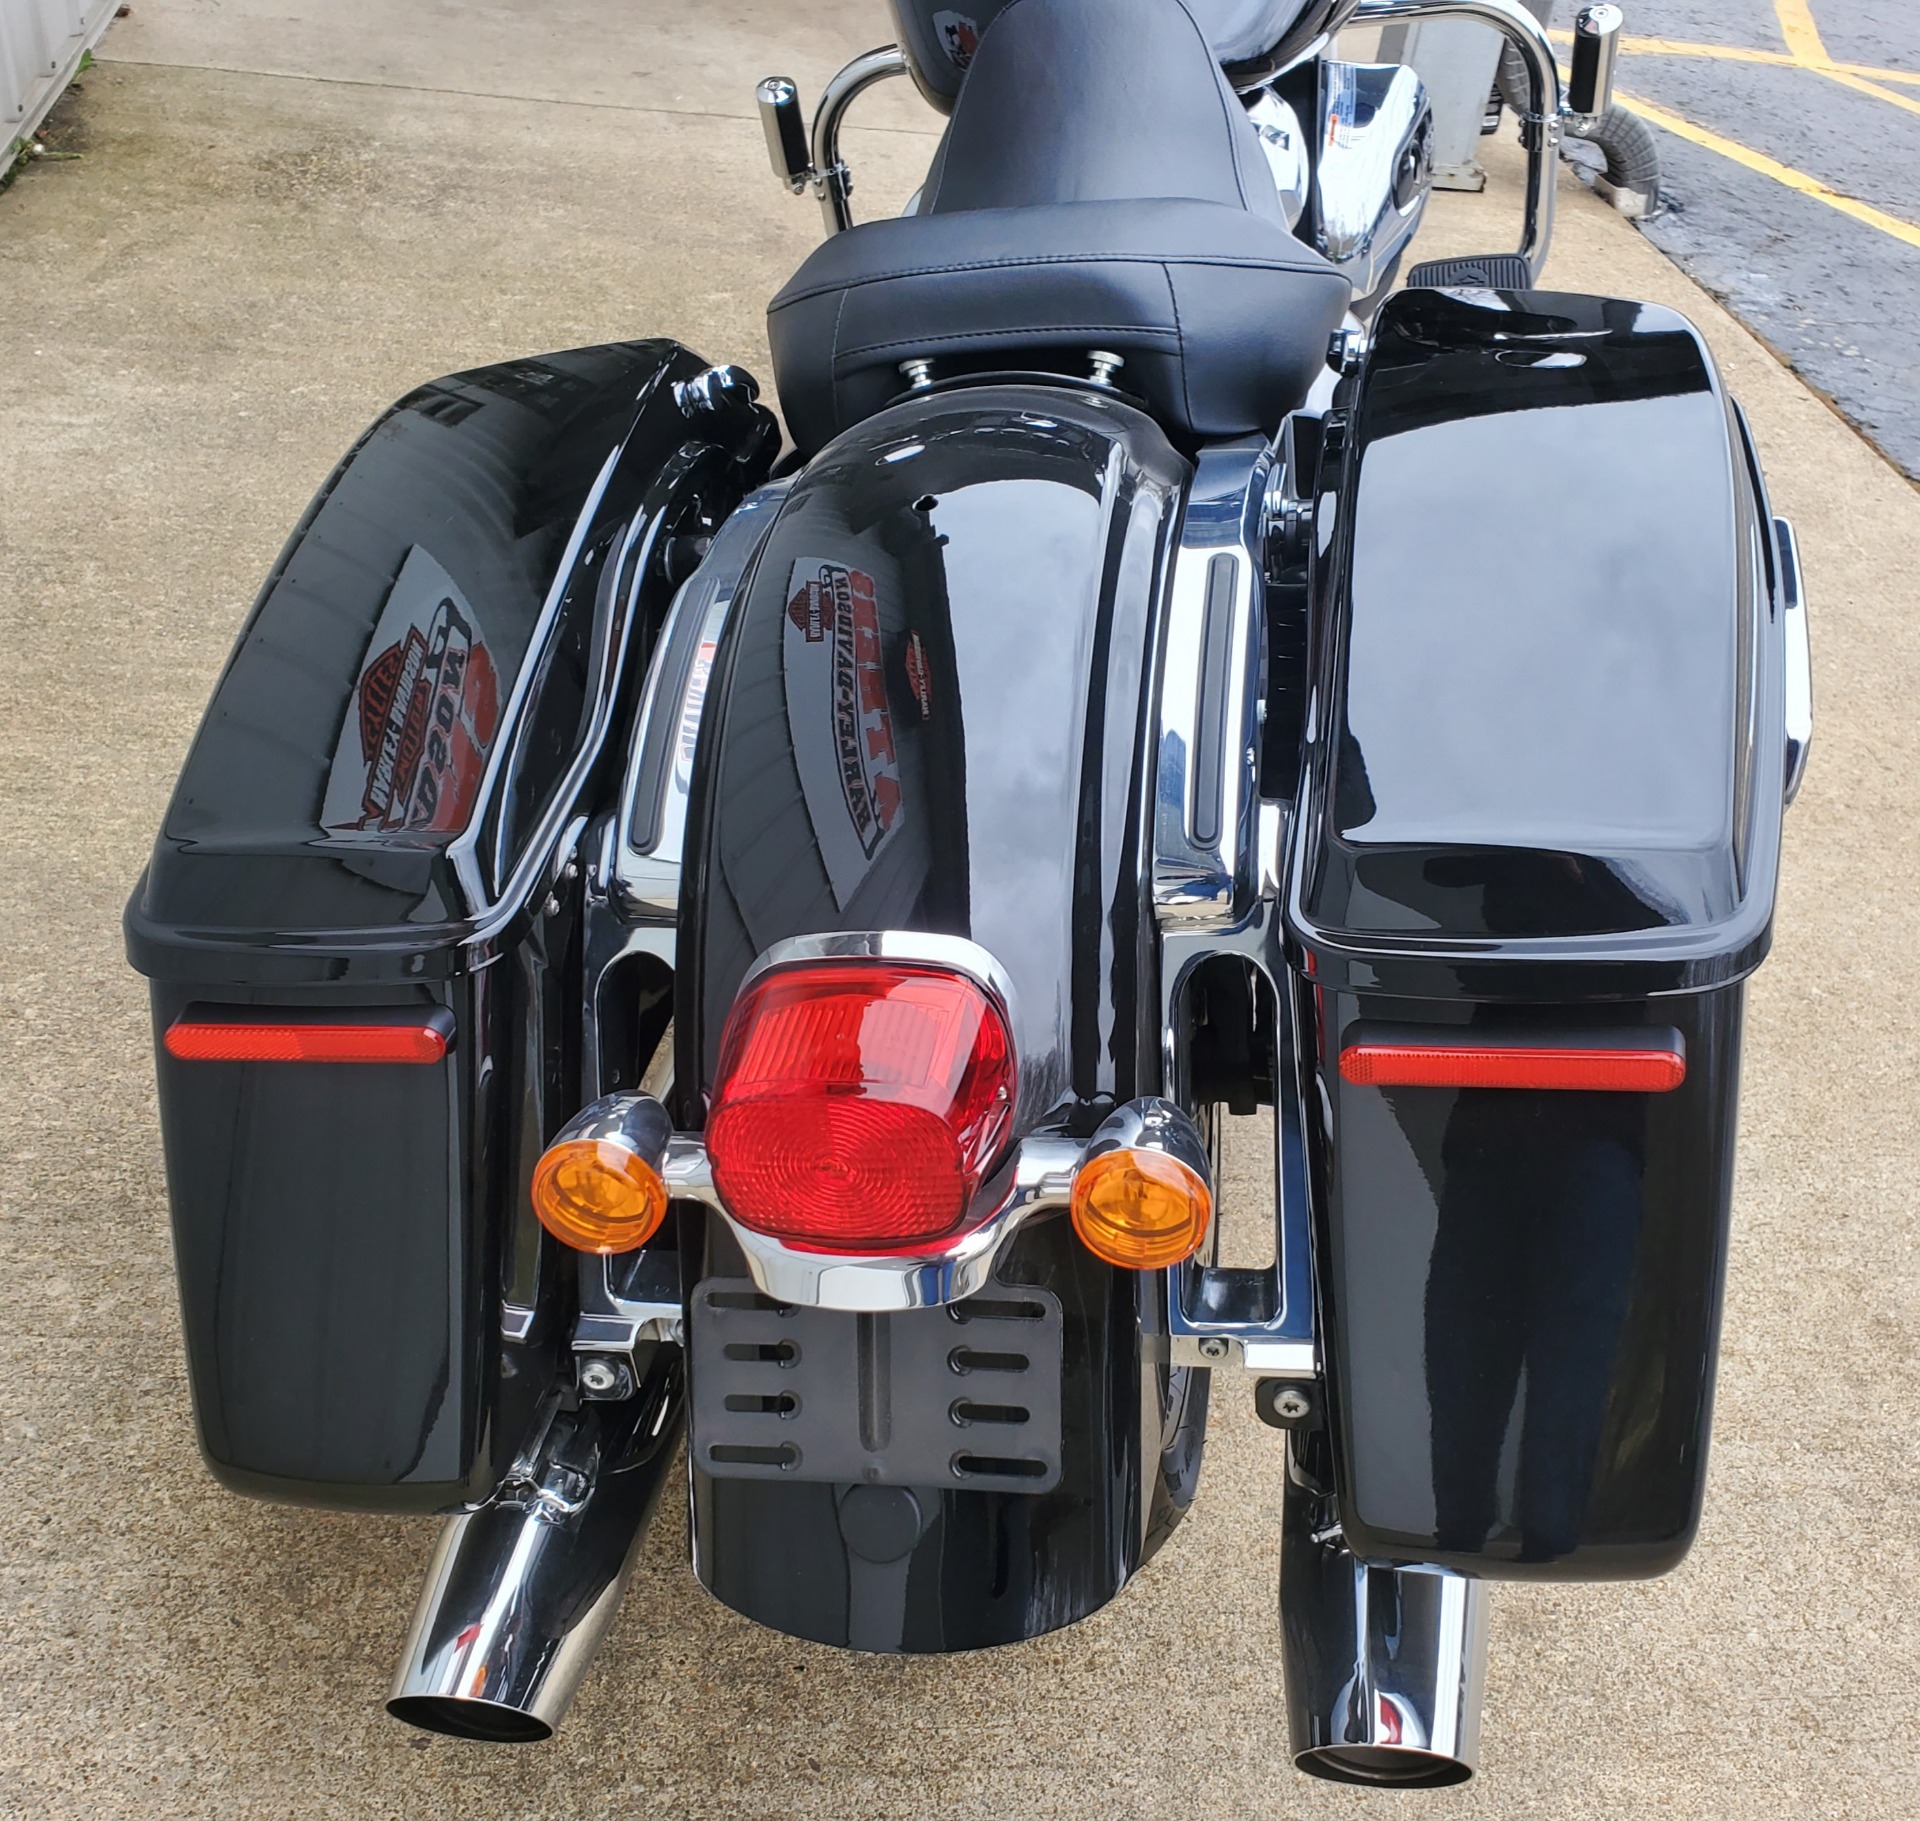 2021 Harley-Davidson Electra Glide® Standard in Athens, Ohio - Photo 12